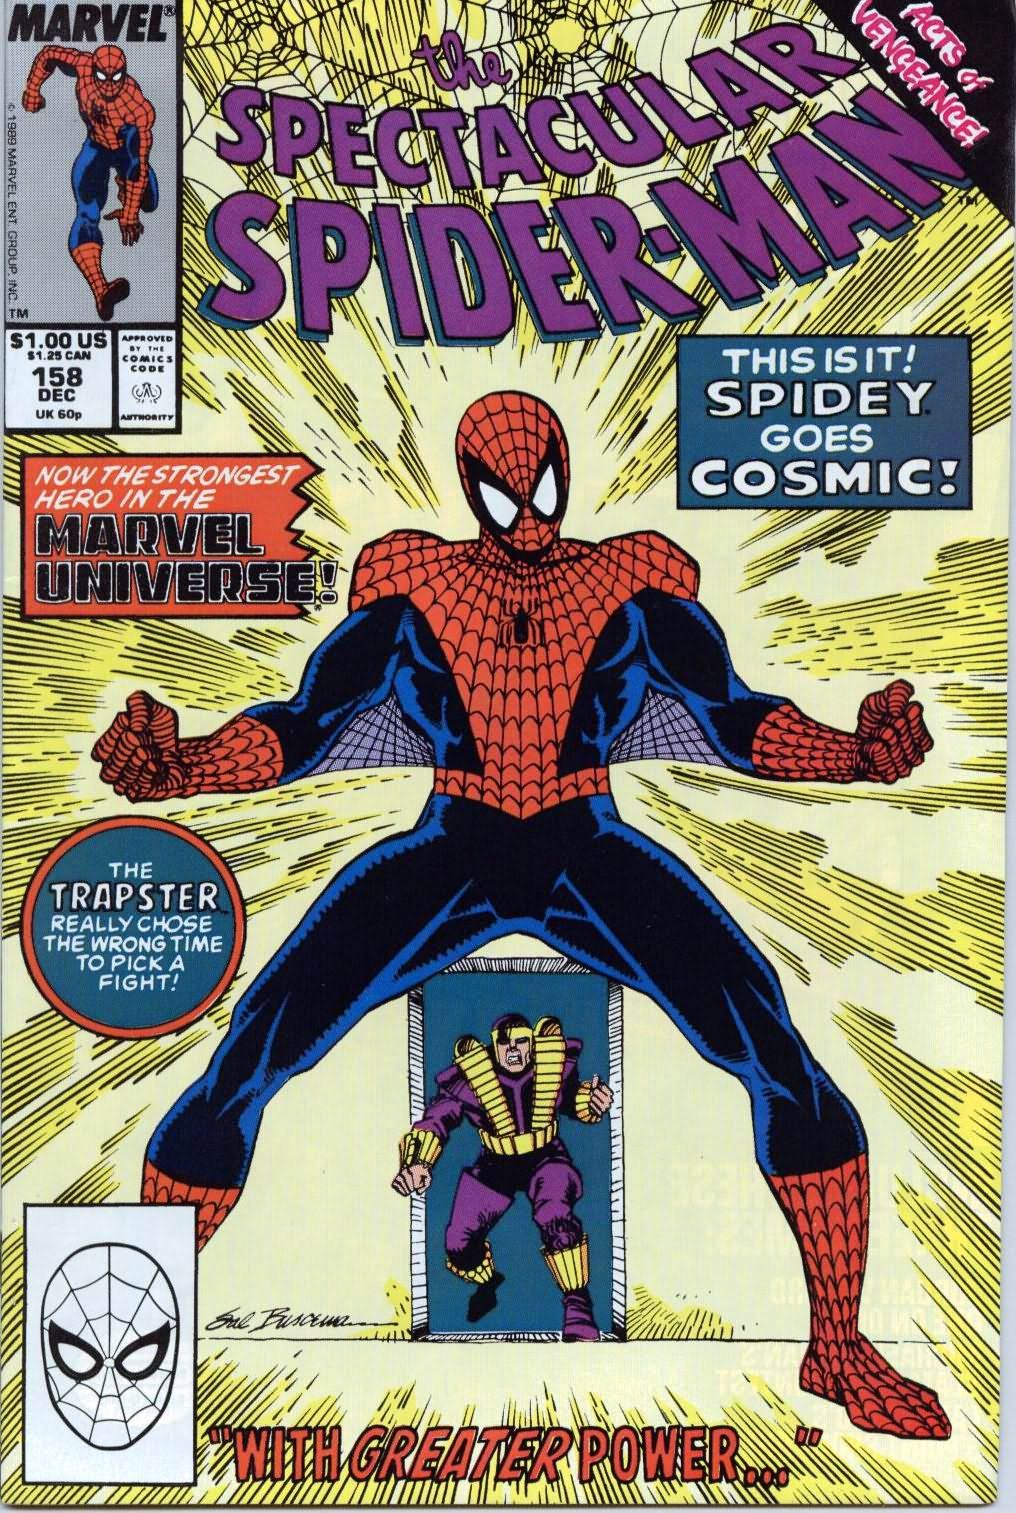 Amazing Spider-Man gets cosmic power